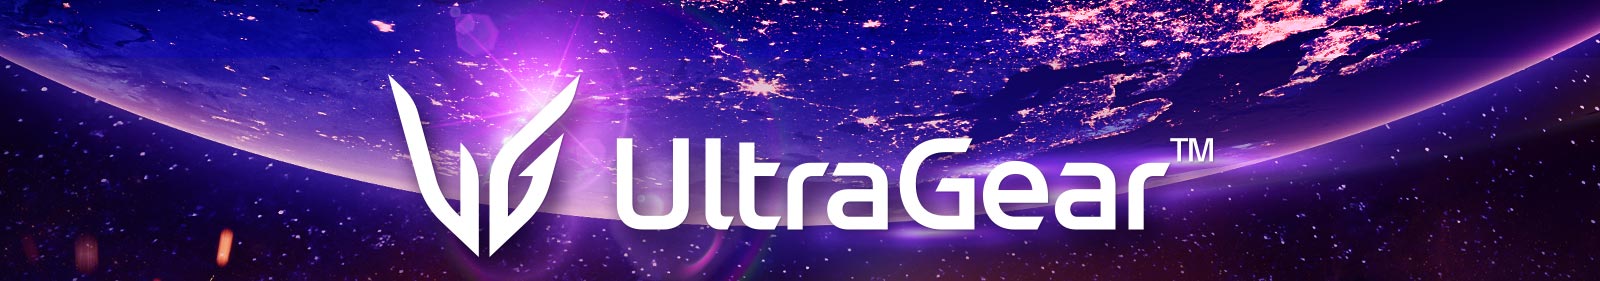 UltraGear™ Gaming Monitor